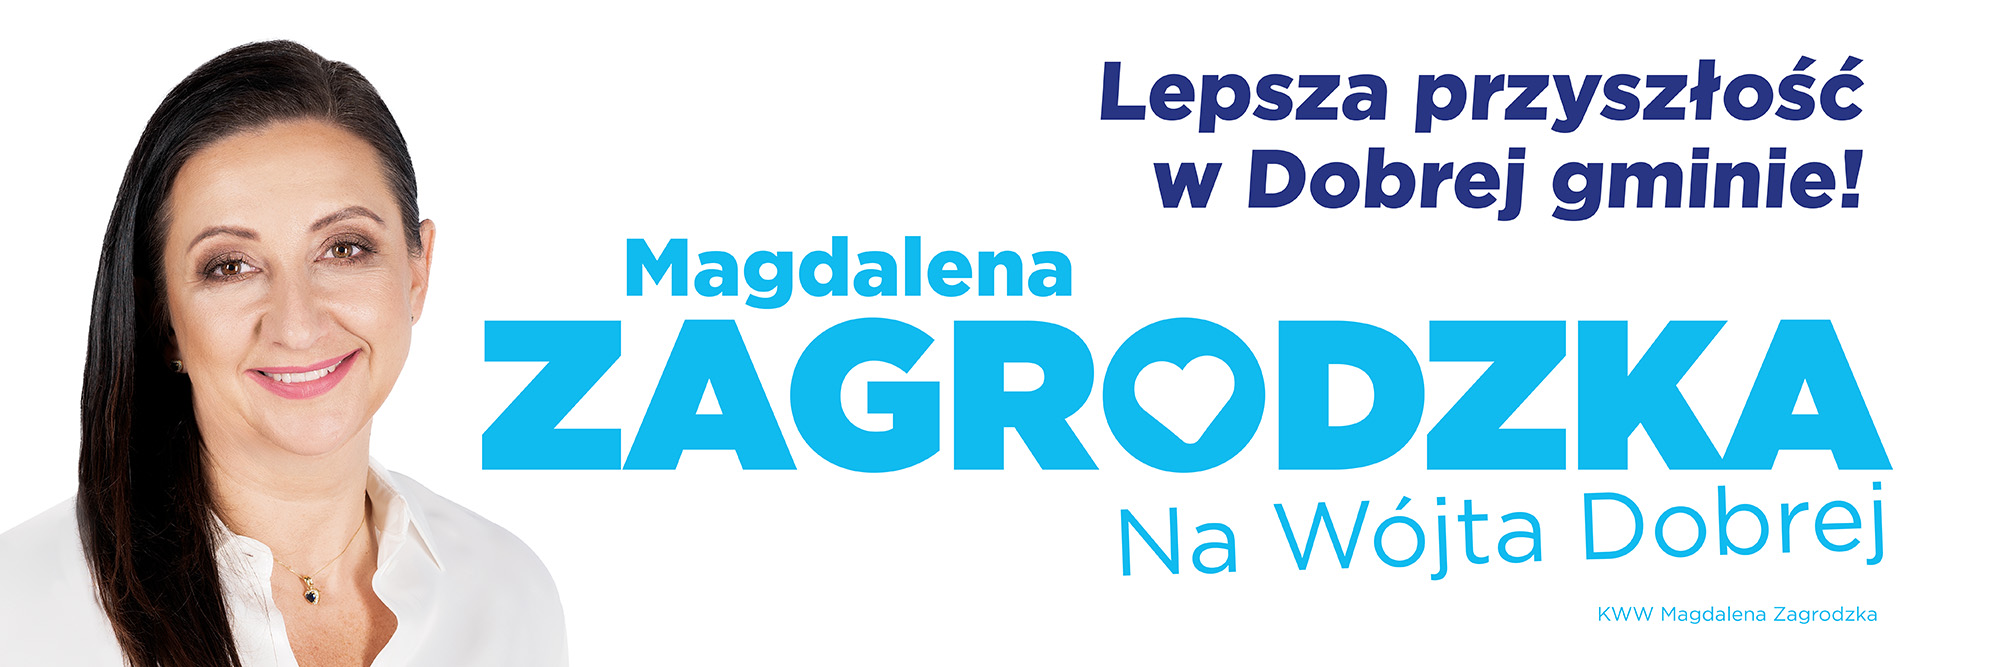 Magdalena Zagrodzka na Wójda Dobrej!